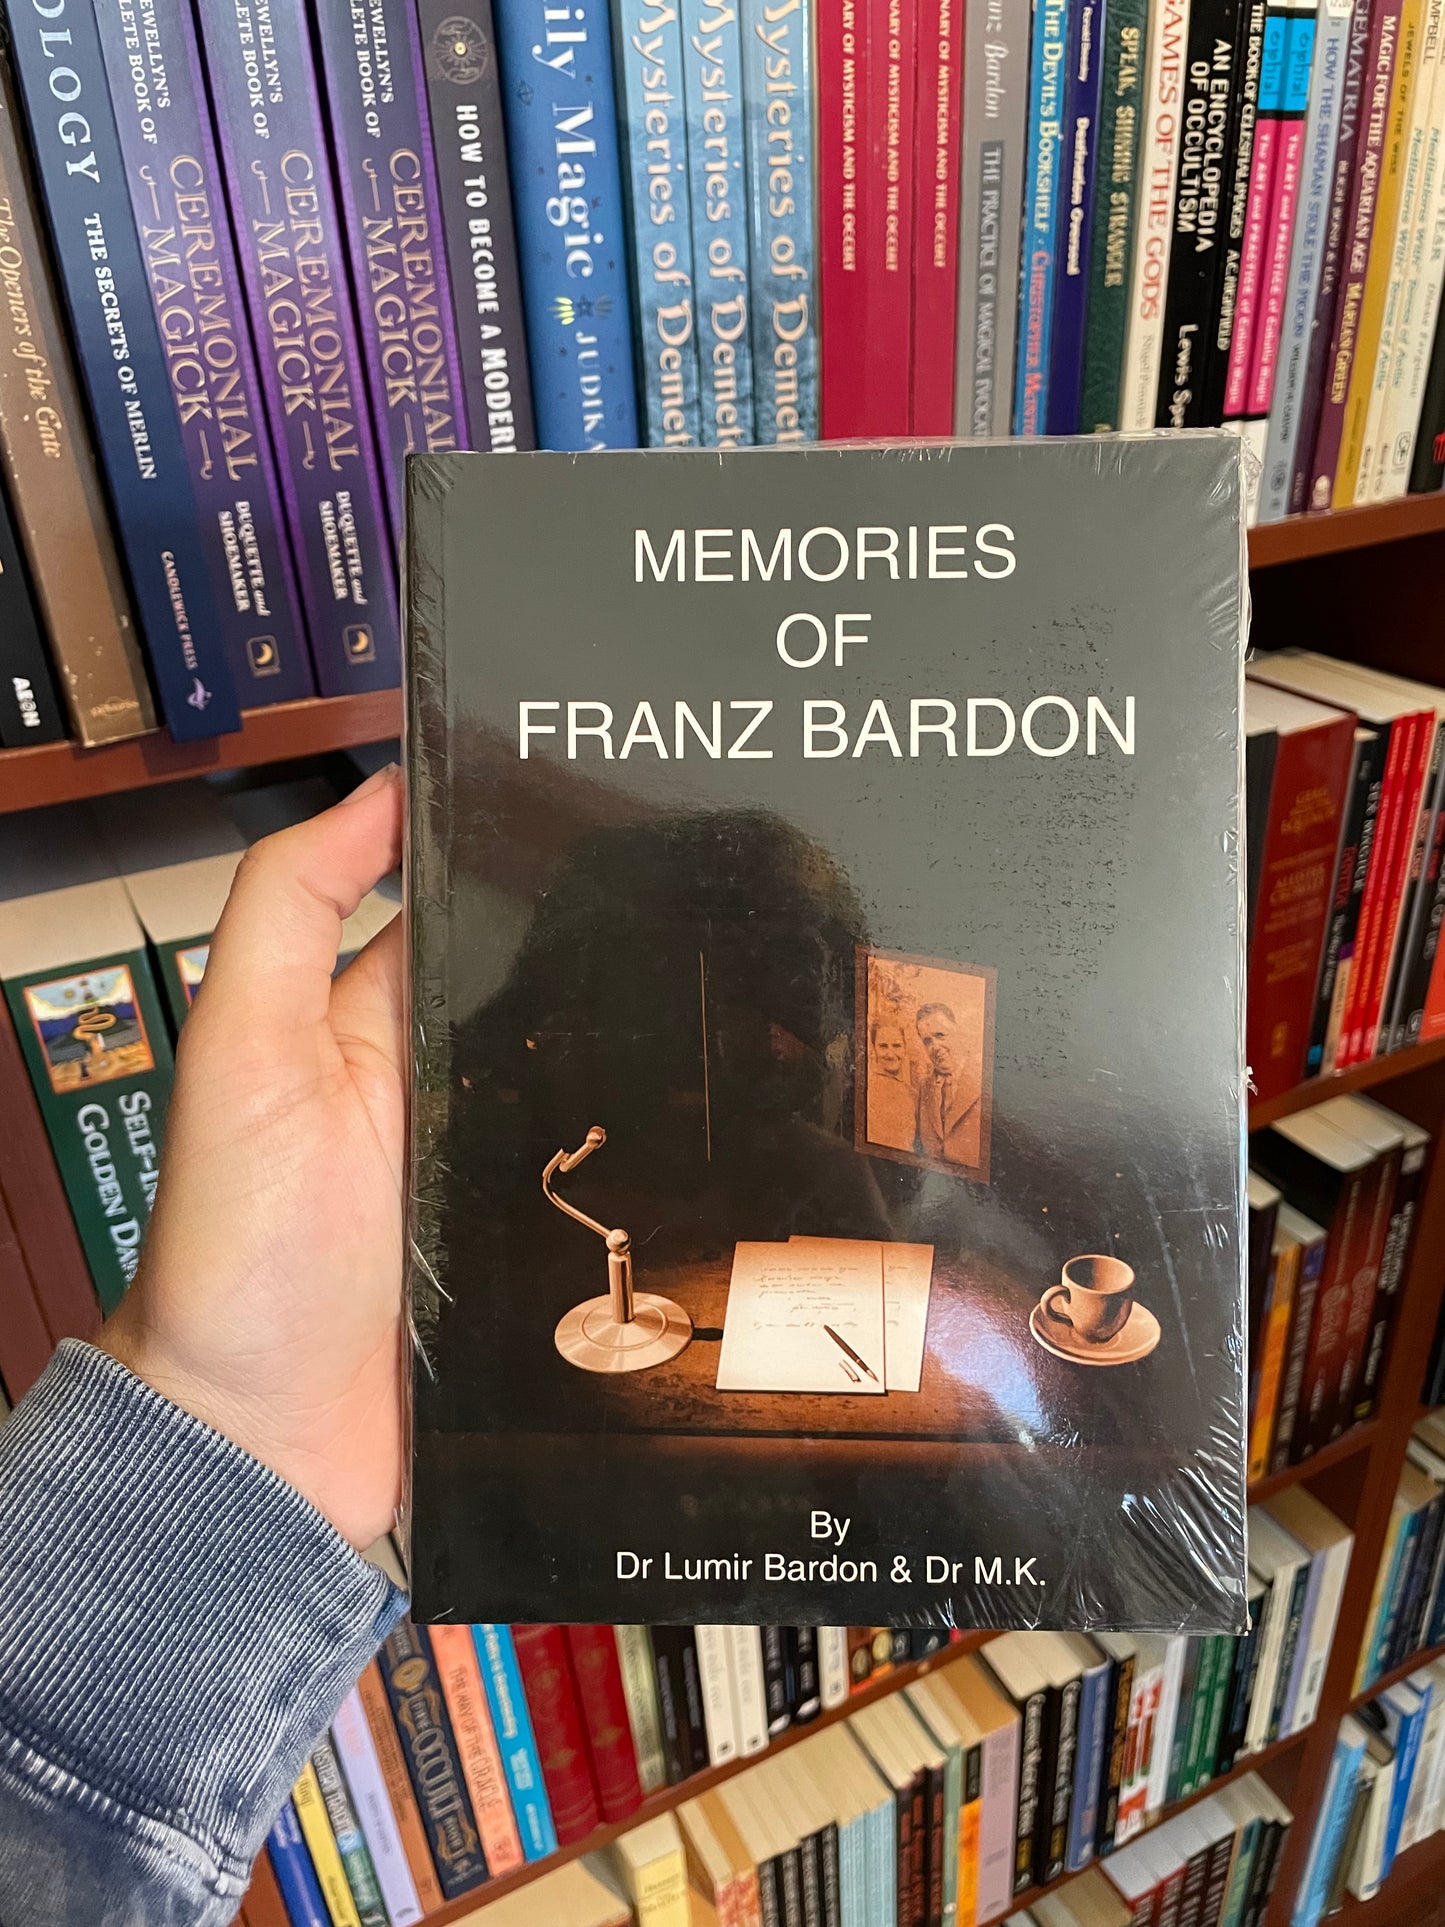 Memories of Franz Bardon by Dr. Lumir Bardon